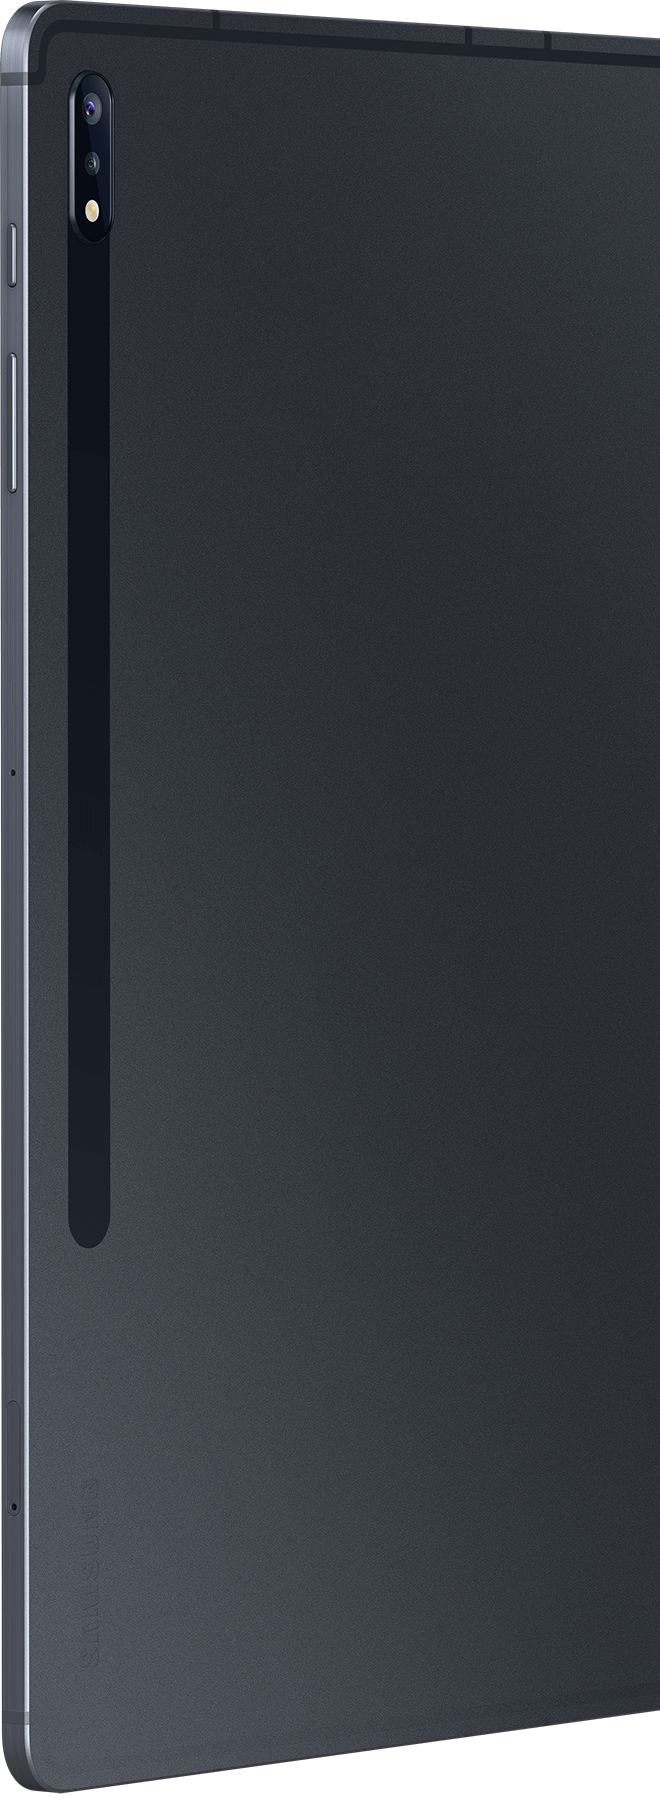 Rear view of Galaxy Tab S7+ in Mystic Black